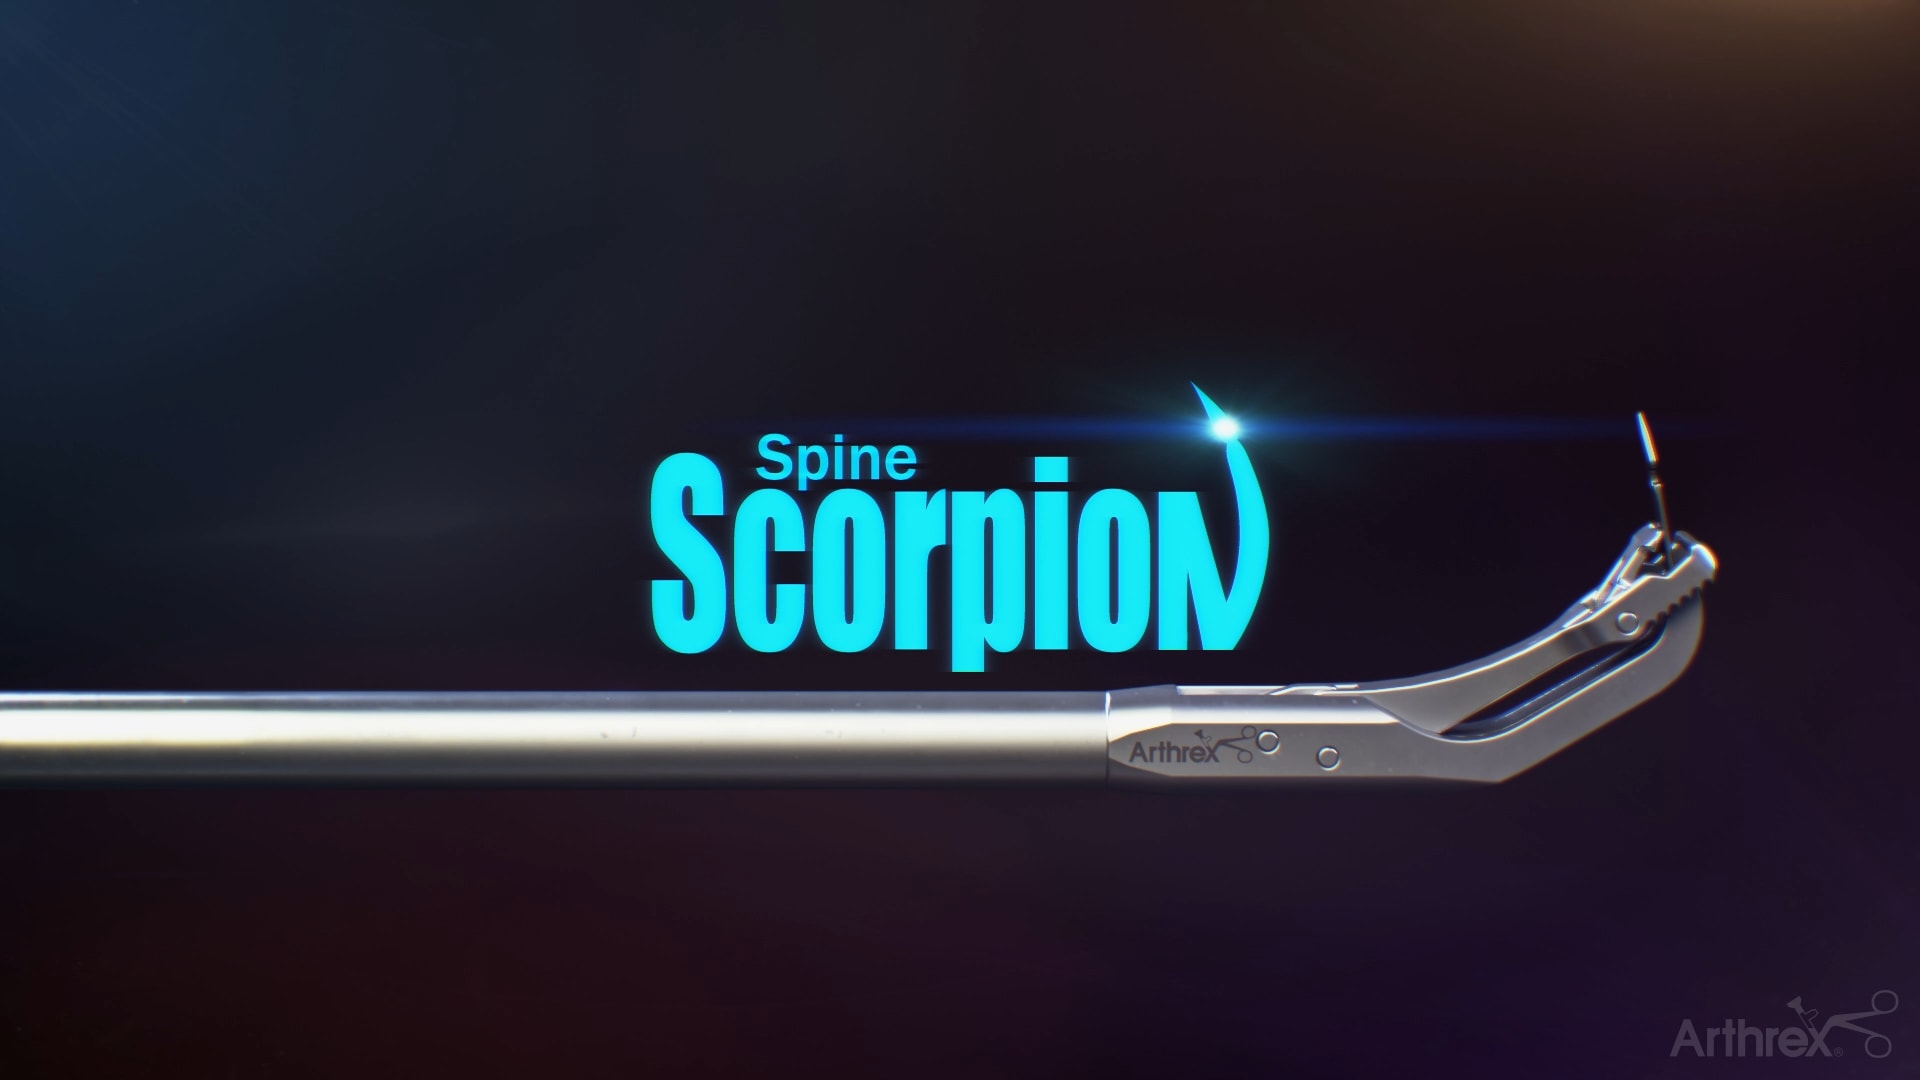 Spinal Fascia Closure Using the Spine Scorpion™ Suture Passer